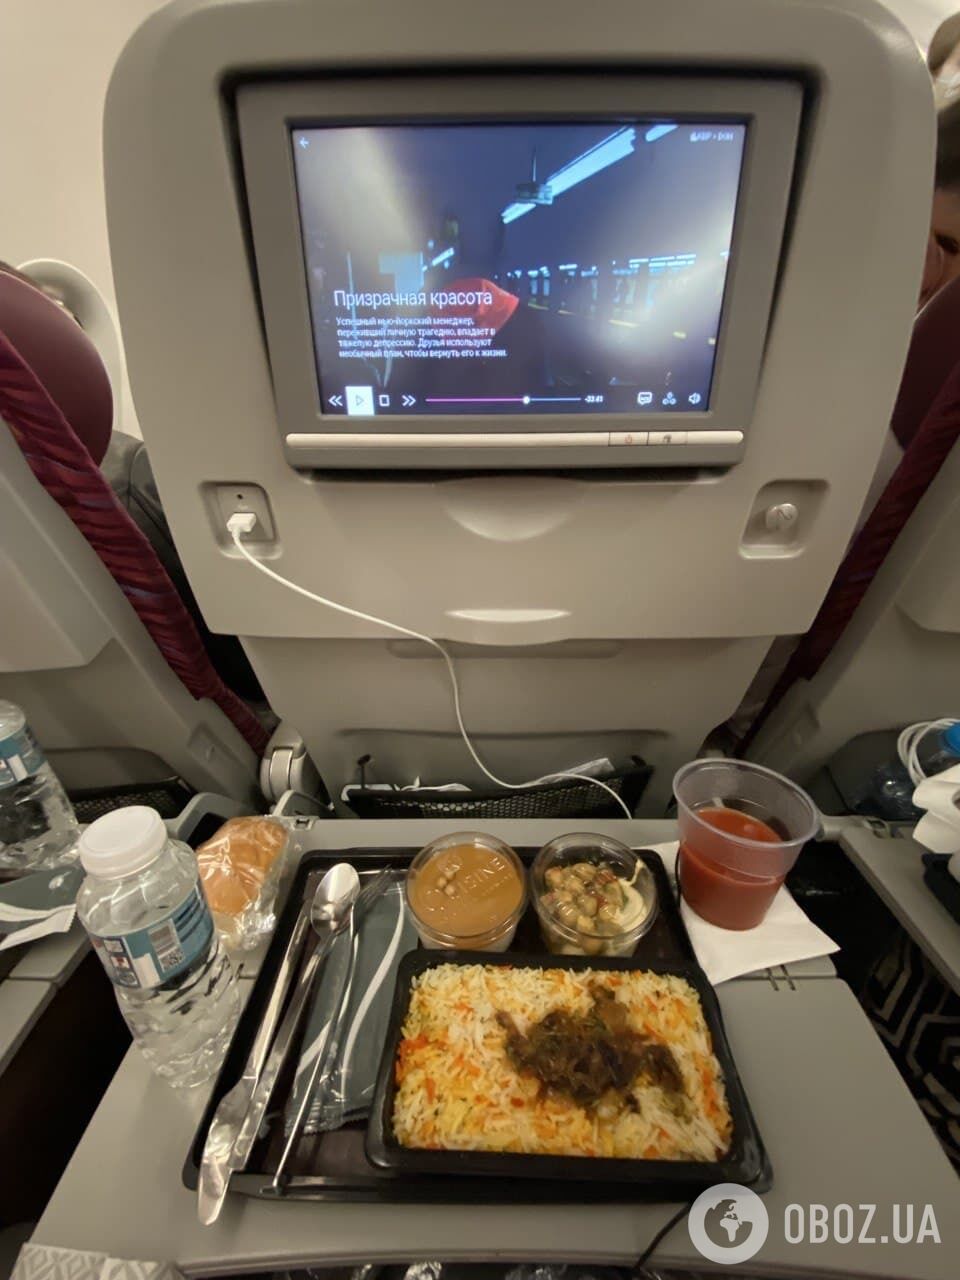 Питание и медиасистема на борту самолета Qatar Airways